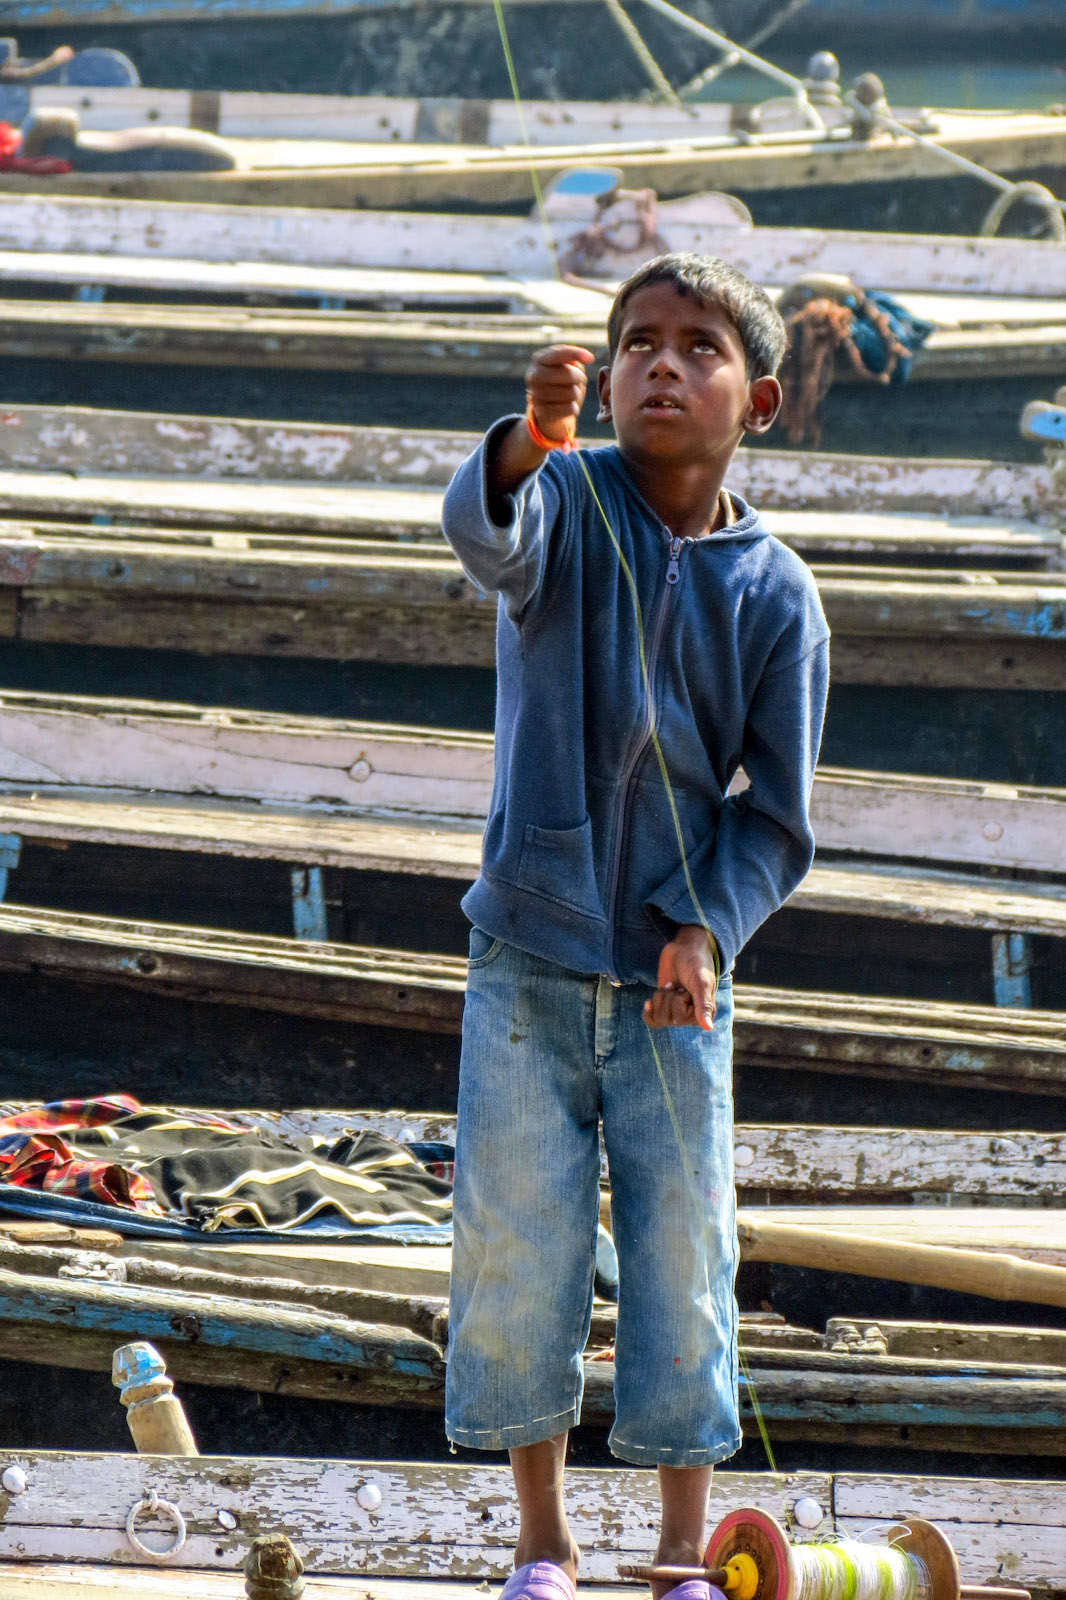 young-boy-concentrates-on-kite-flying-varanasi